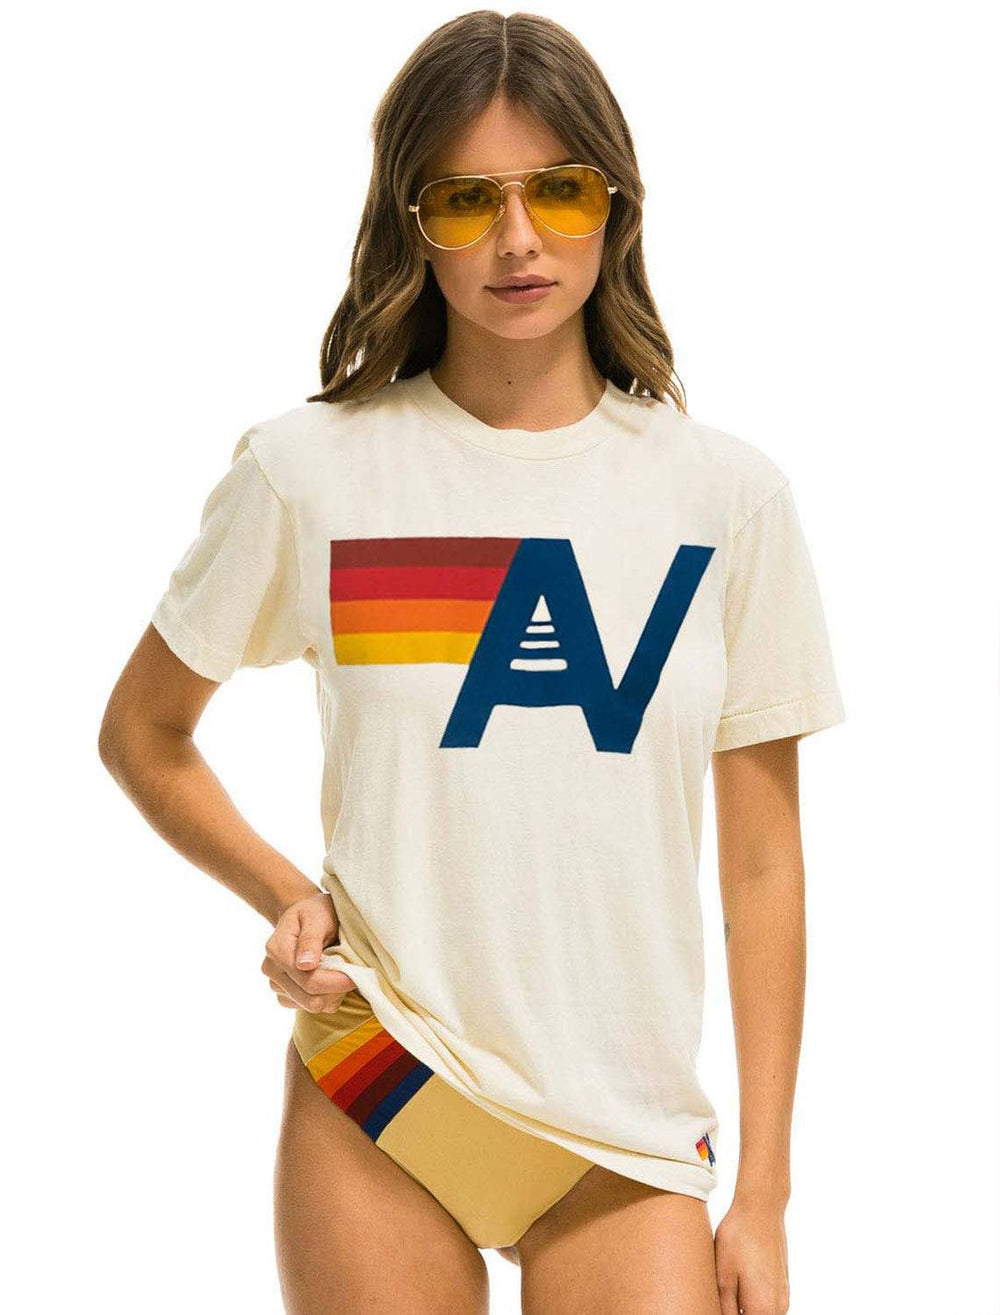 Model wearing Aviator Nation's logo crew tee shirt in vintage white.